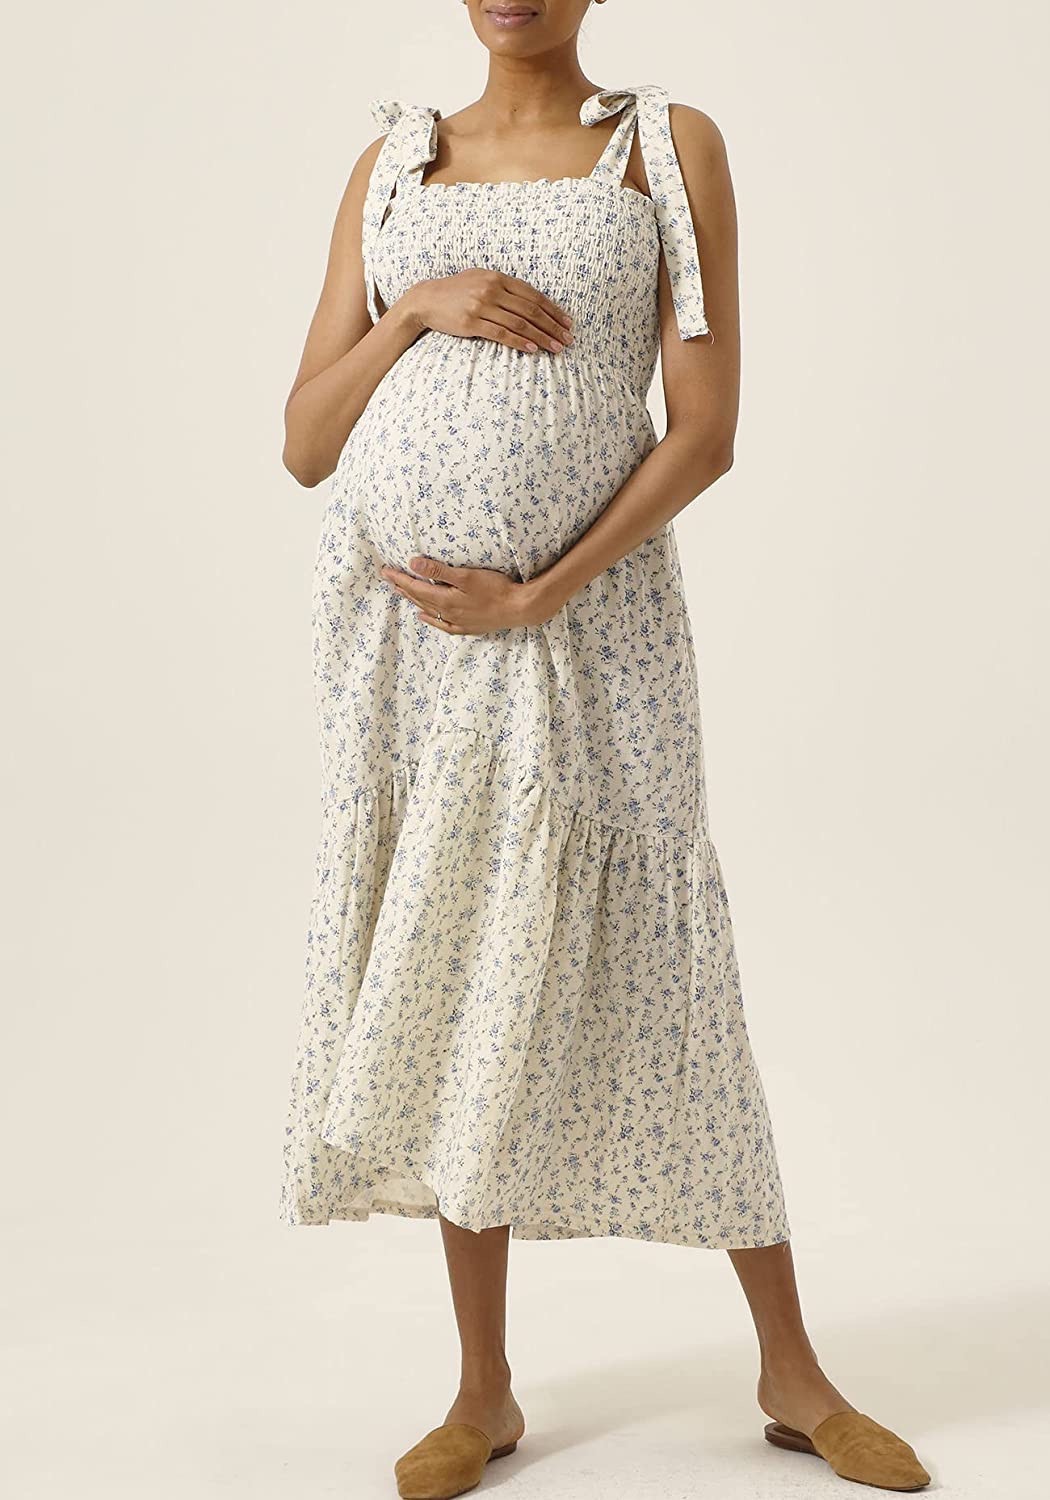 maternity dress for photoshoot